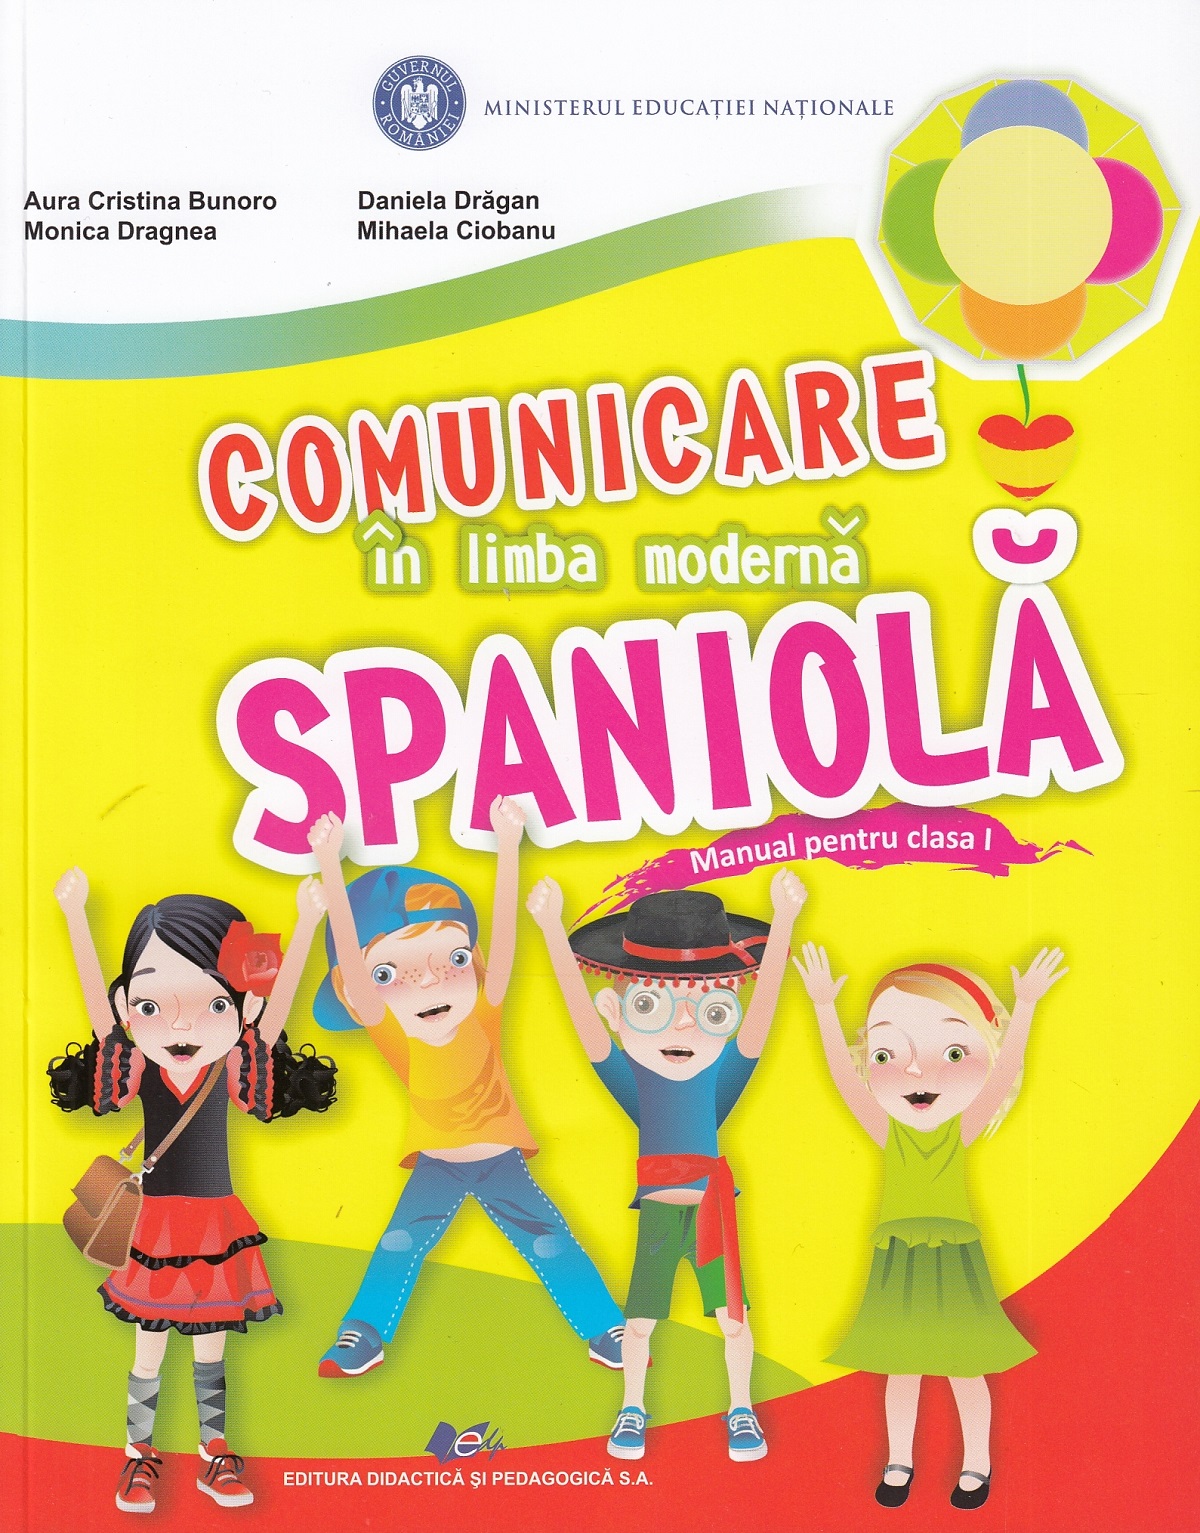 Comunicare in limba moderna spaniola - Clasa 1 - Manual - Aura Cristina Bunoro, Daniela Dragan